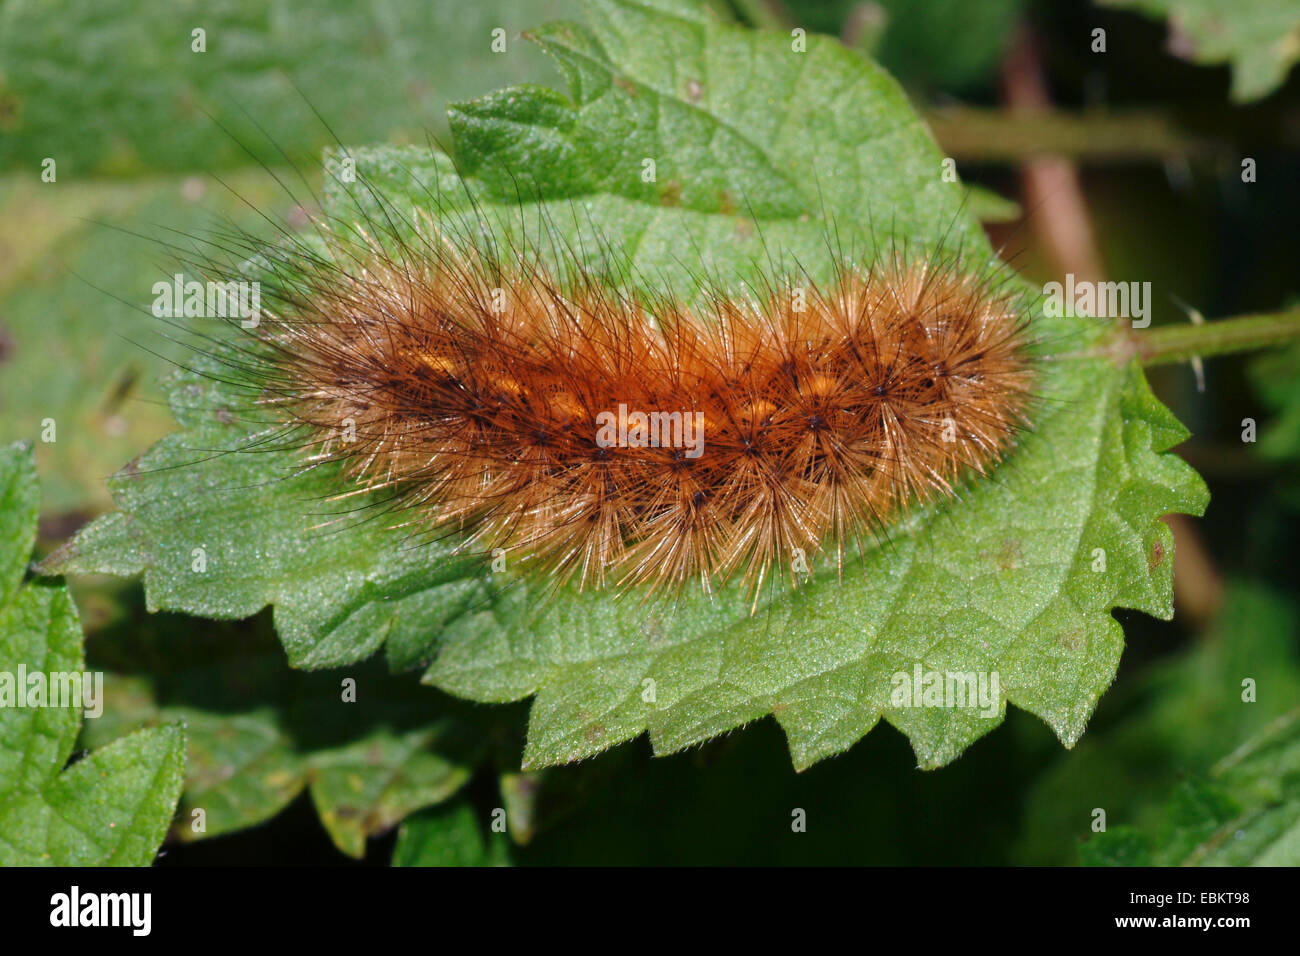 Ruby tiger (Phragmatobia fuliginosa), Caterpillar seduto su una foglia, Germania Foto Stock